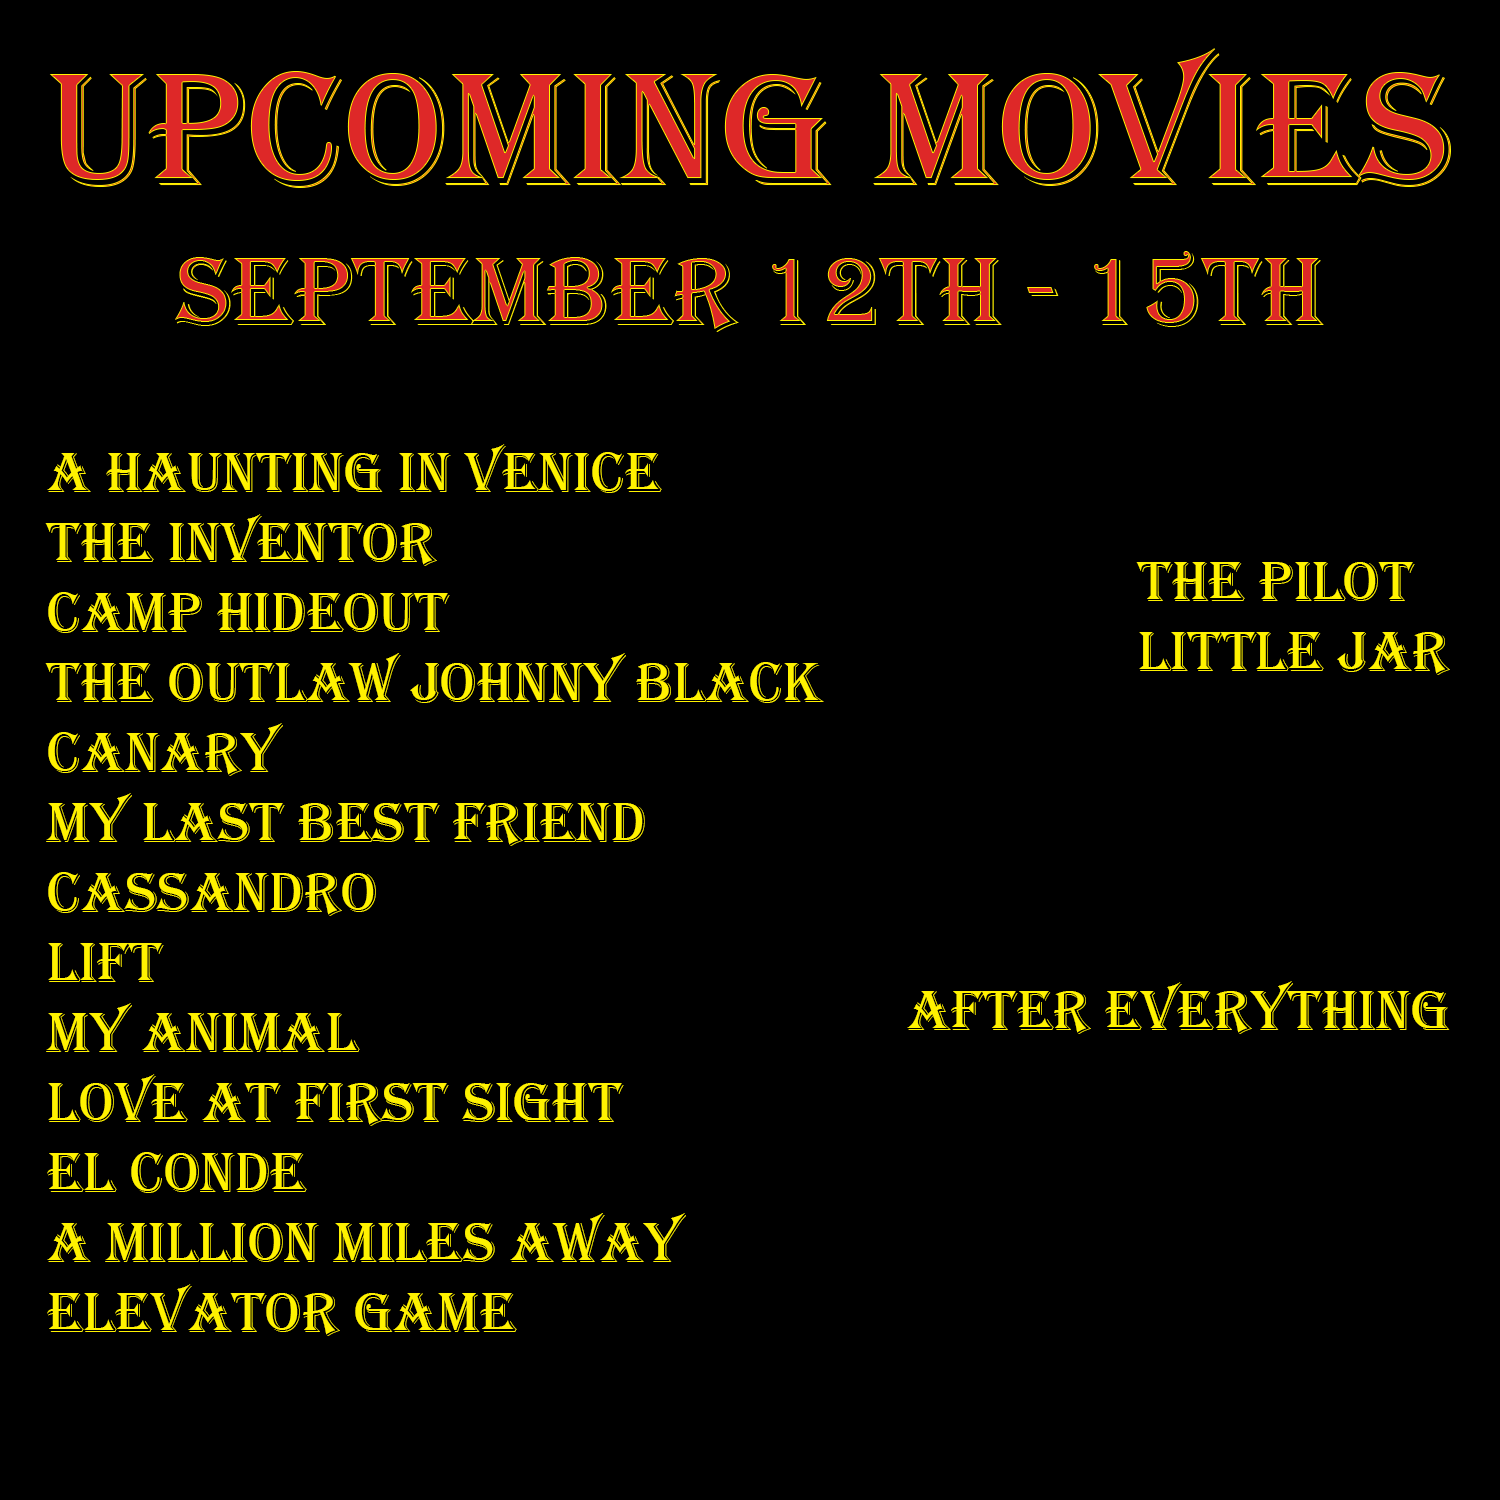 Upcoming Movies (September 12th - 15th) (16 Movies)